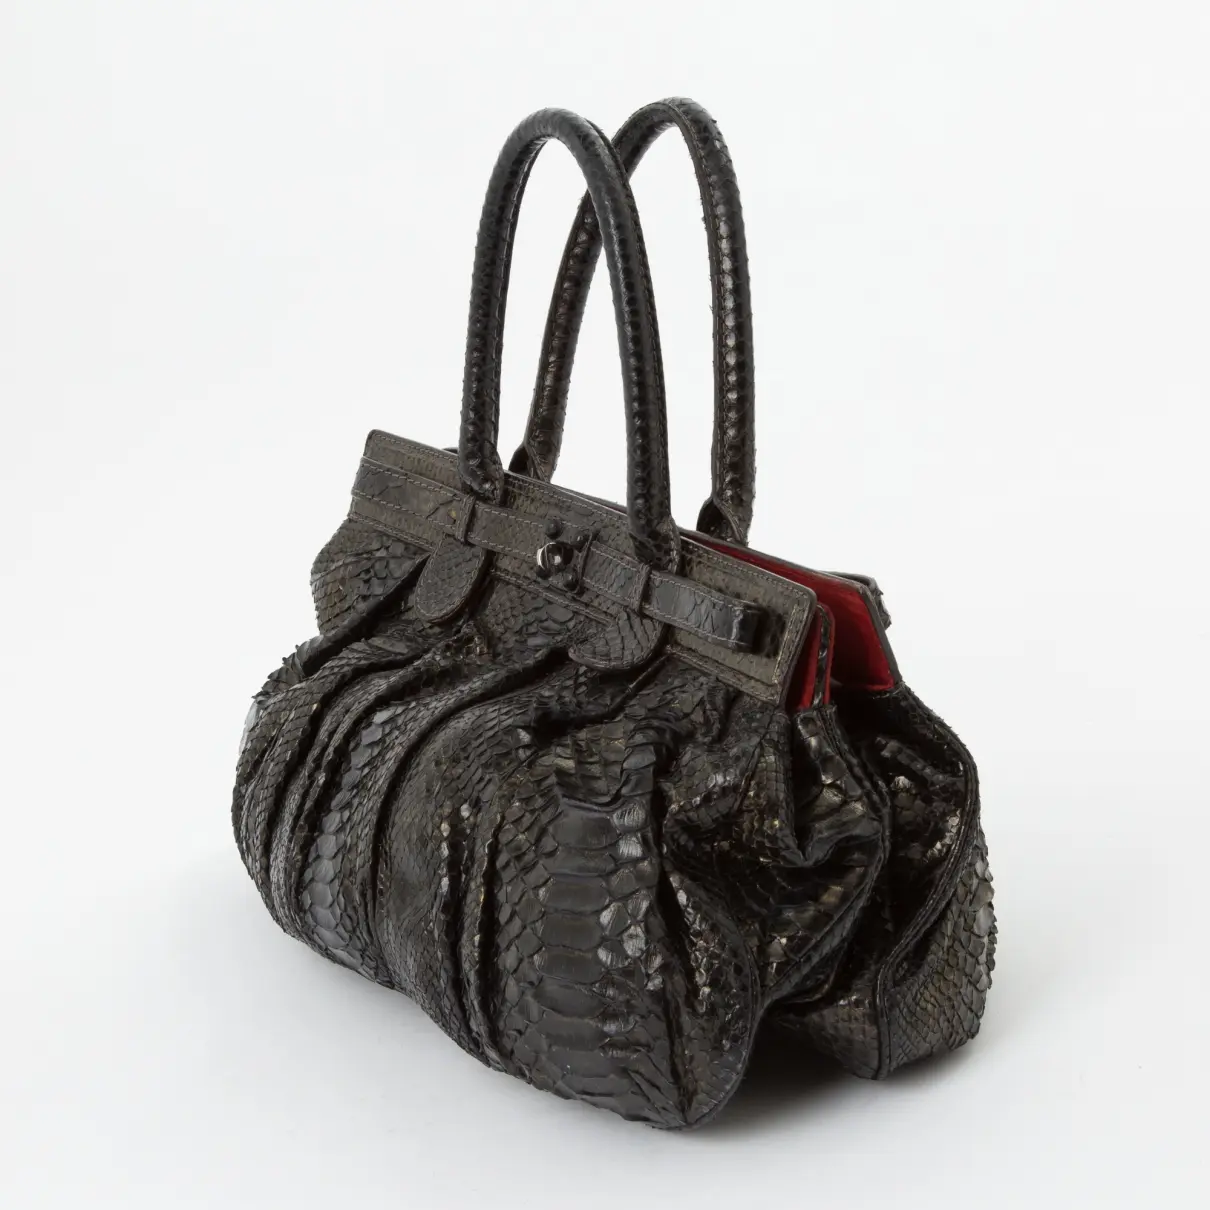 ZAGLIANI Python handbag for sale